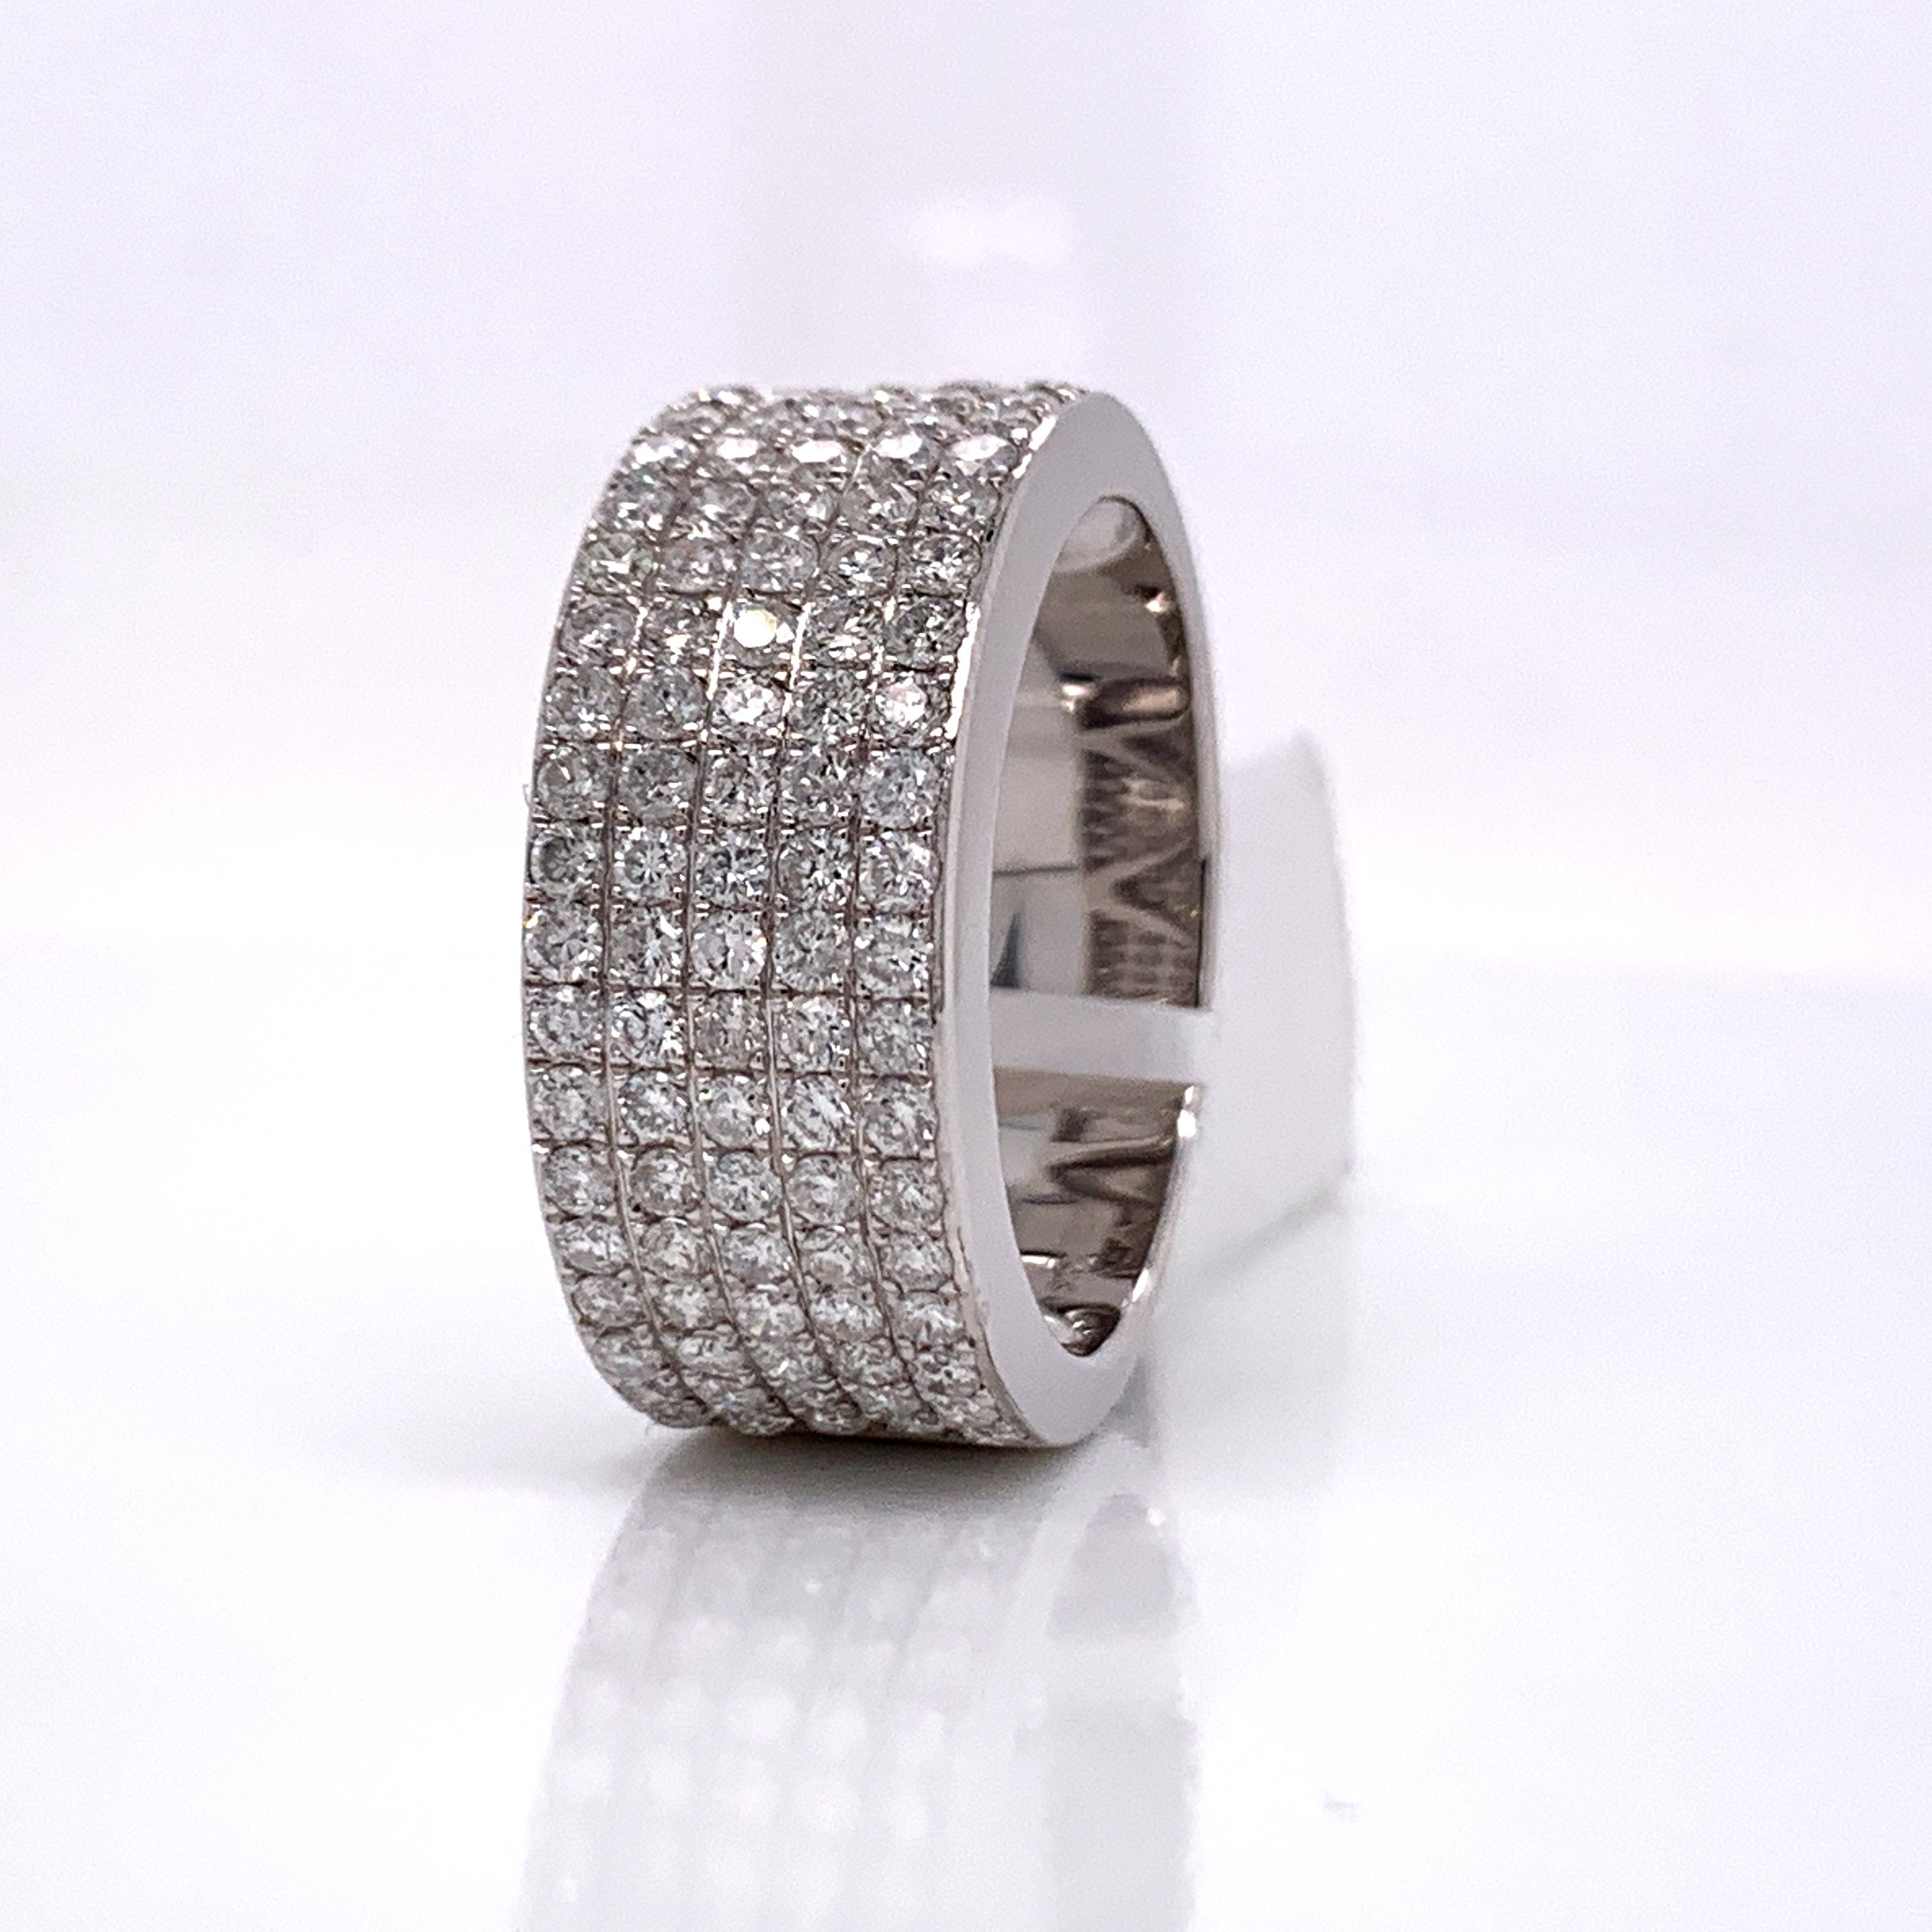 1.97 CT. Diamond Ring in 10K Gold - White Carat Diamonds 